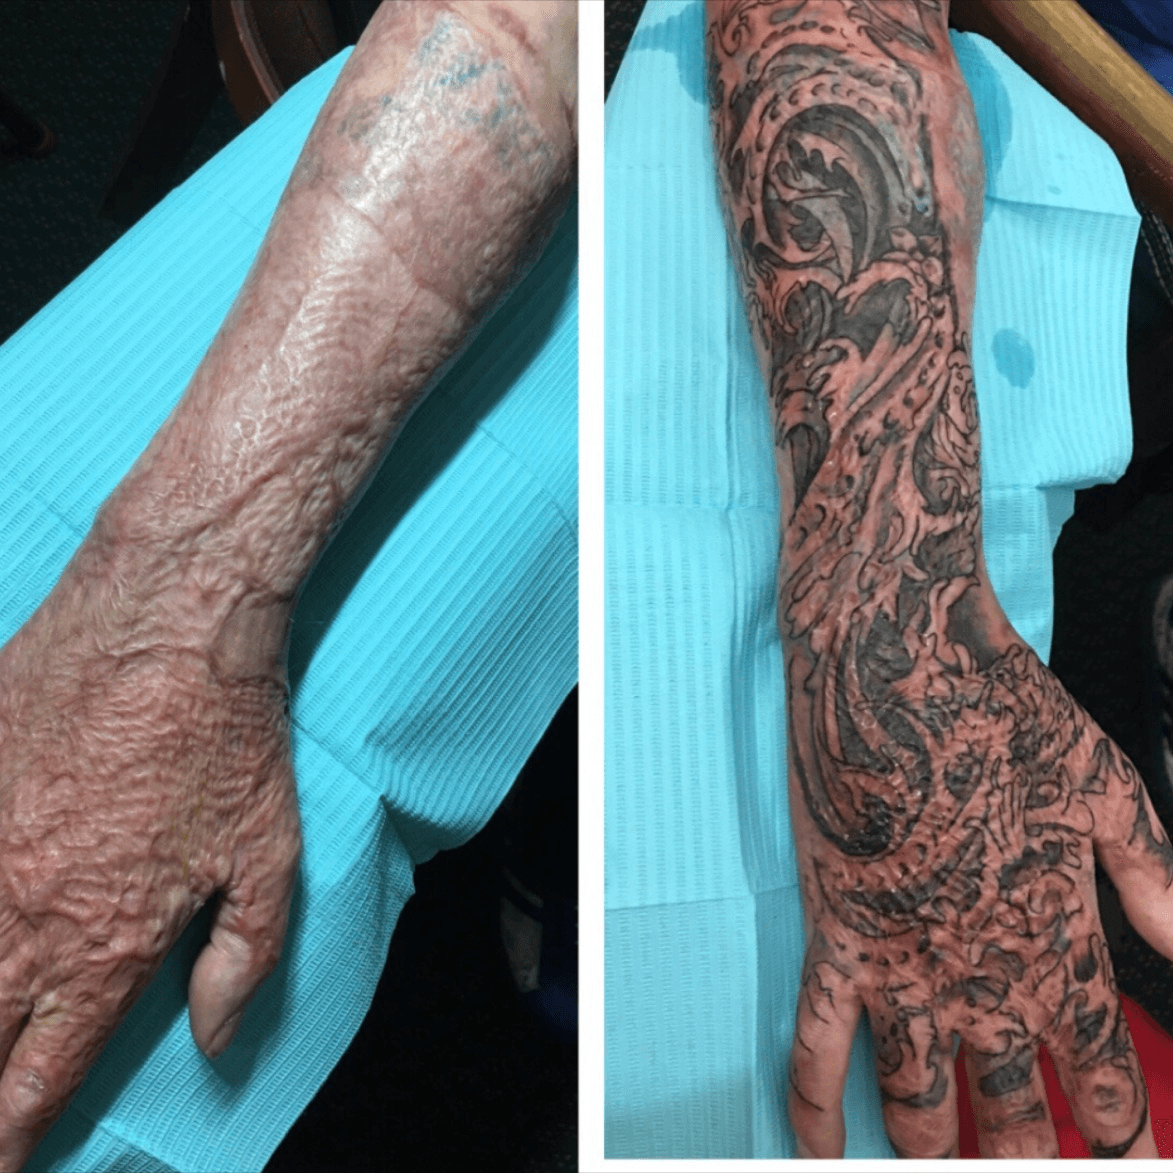 Tattoo artist conceals burn scars